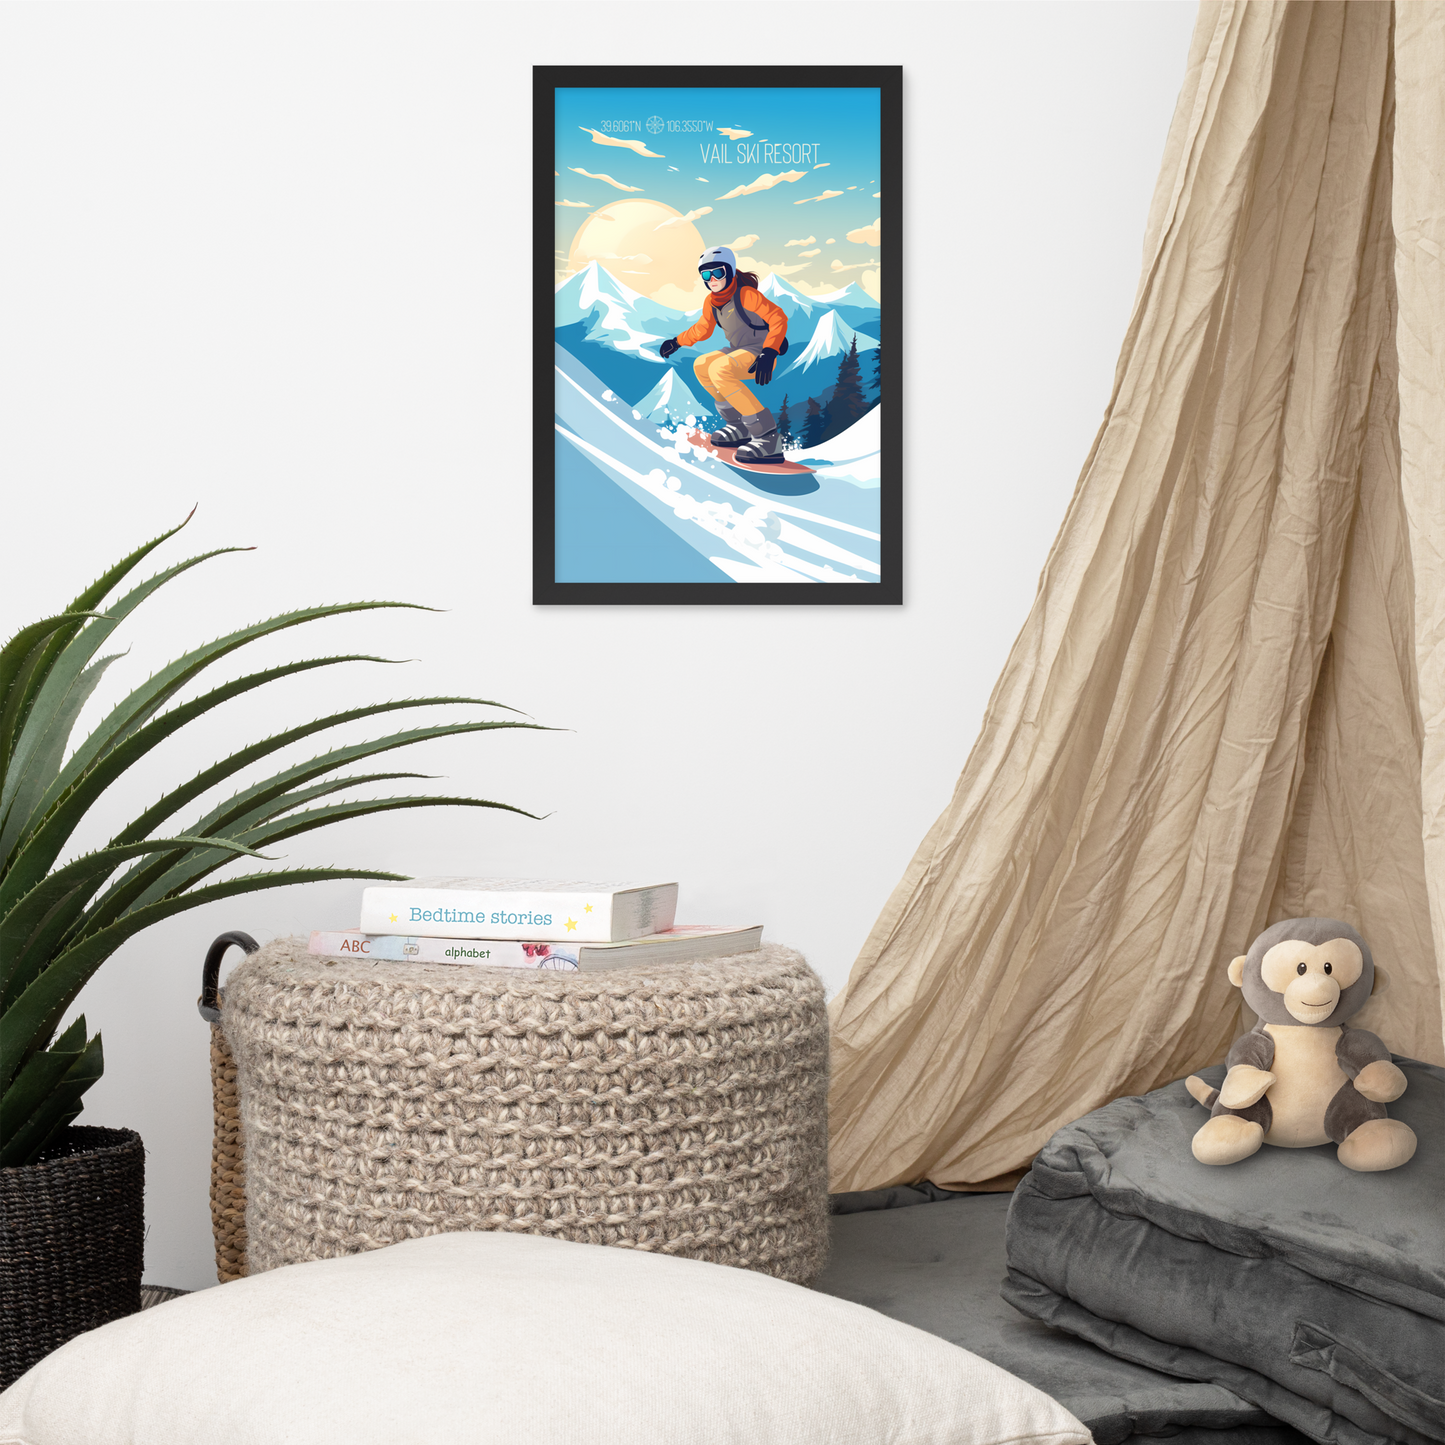 Colorado - Vail Ski Resort - Woman Snowboard (Framed poster)